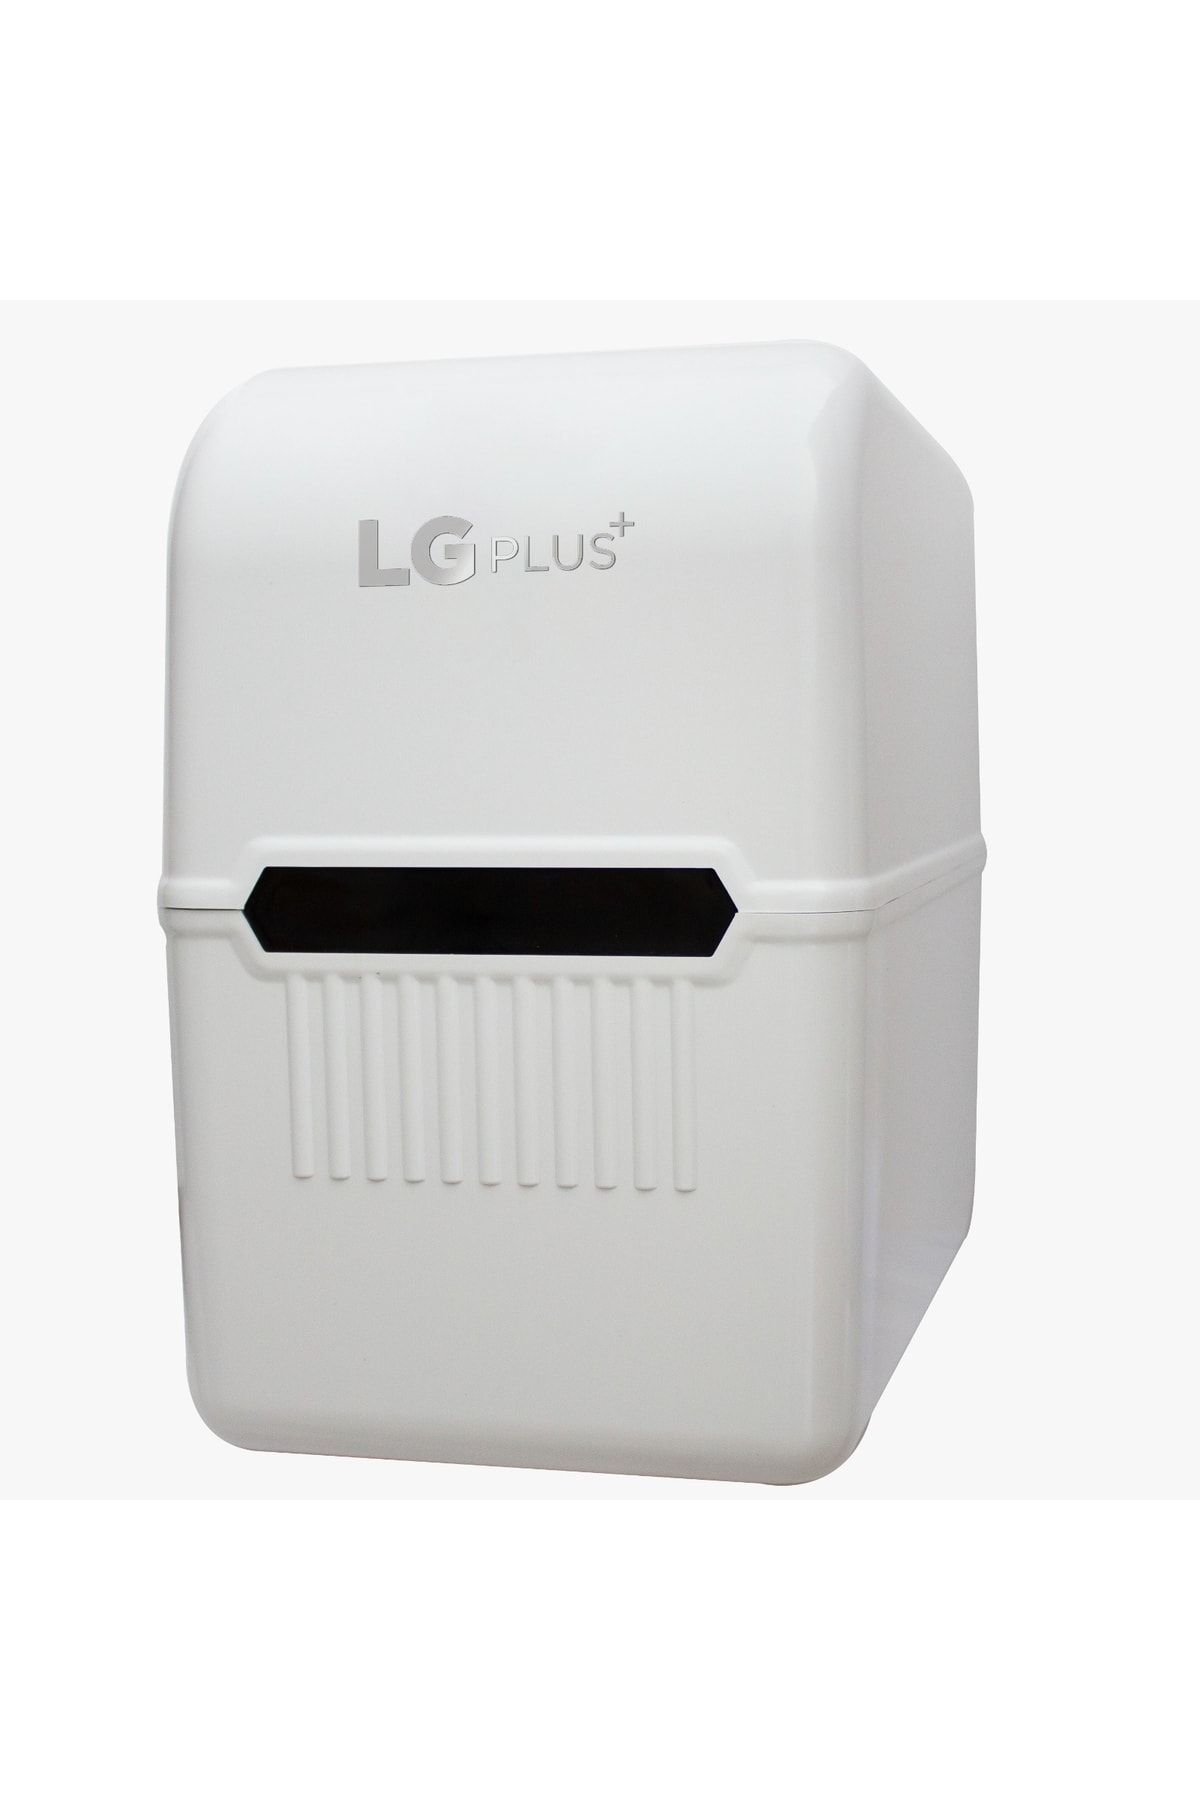 LG Plus Su Arıtma Cihazı Lg Plus 01